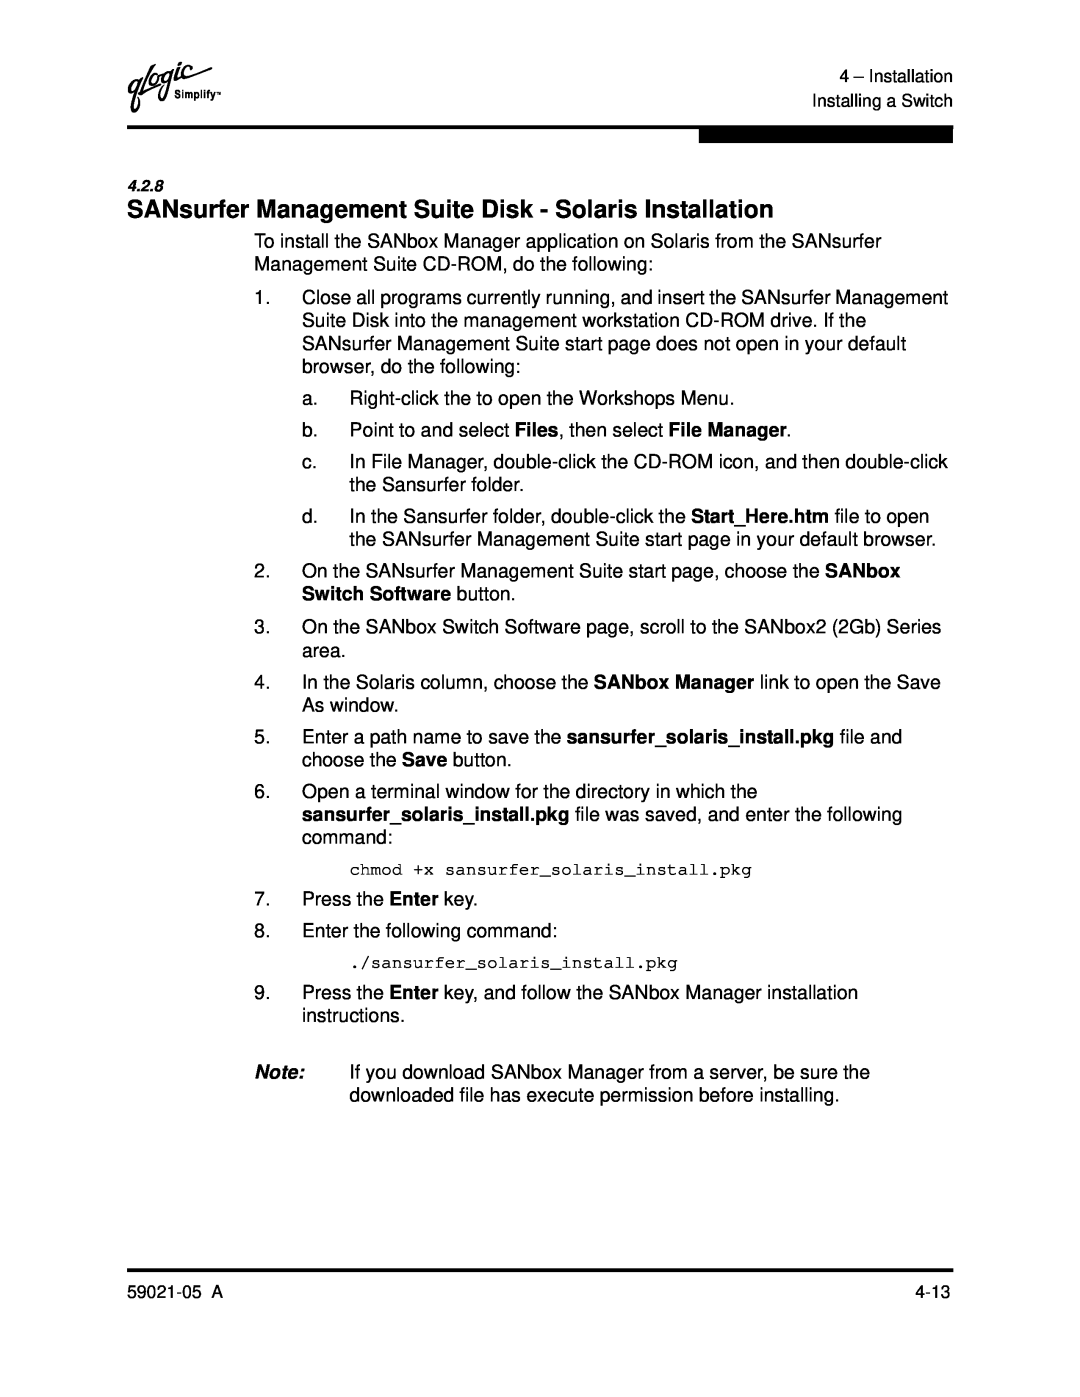 Q-Logic 59021-05 manual SANsurfer Management Suite Disk - Solaris Installation, chmod +x sansurfersolarisinstall.pkg 